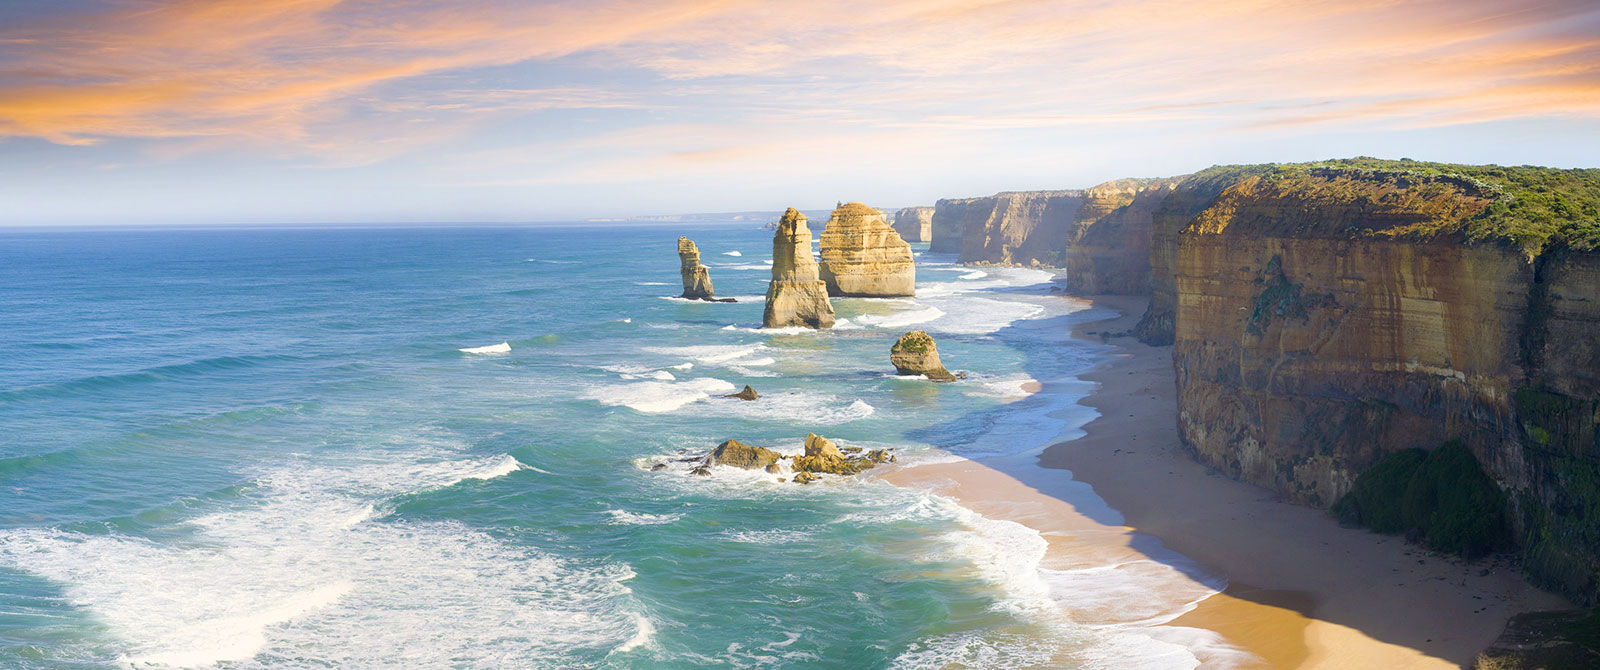 Great Ocean Road Tour - Australia Vacations - Twelve Apostles Great Ocean Road